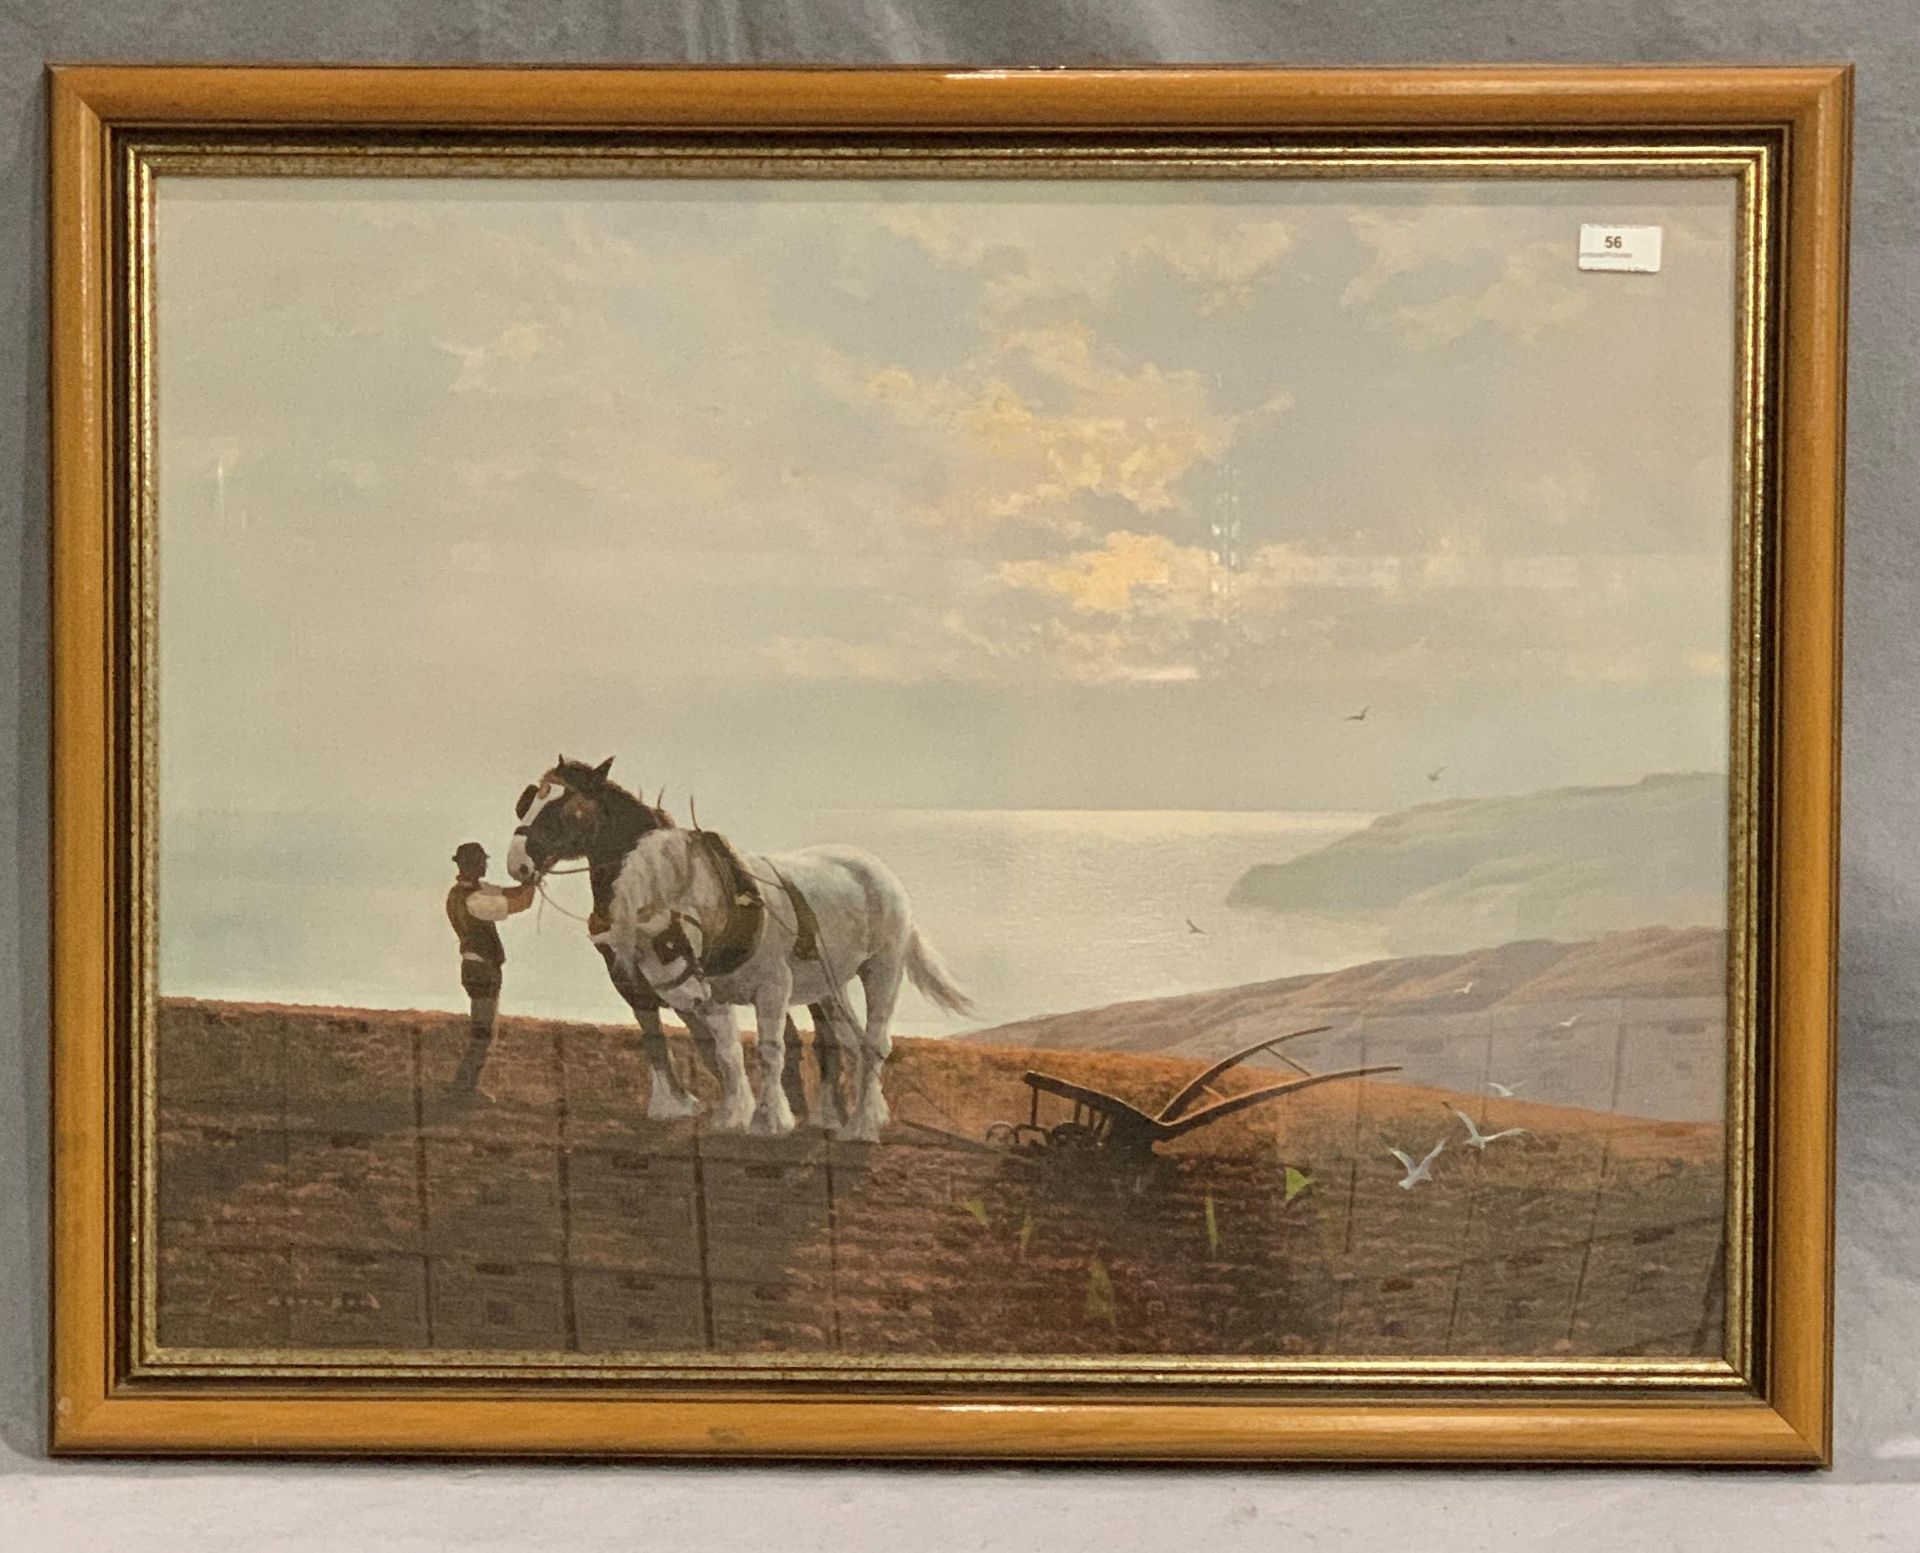 Coulson framed print 'Ploughing' 54 x 75cm